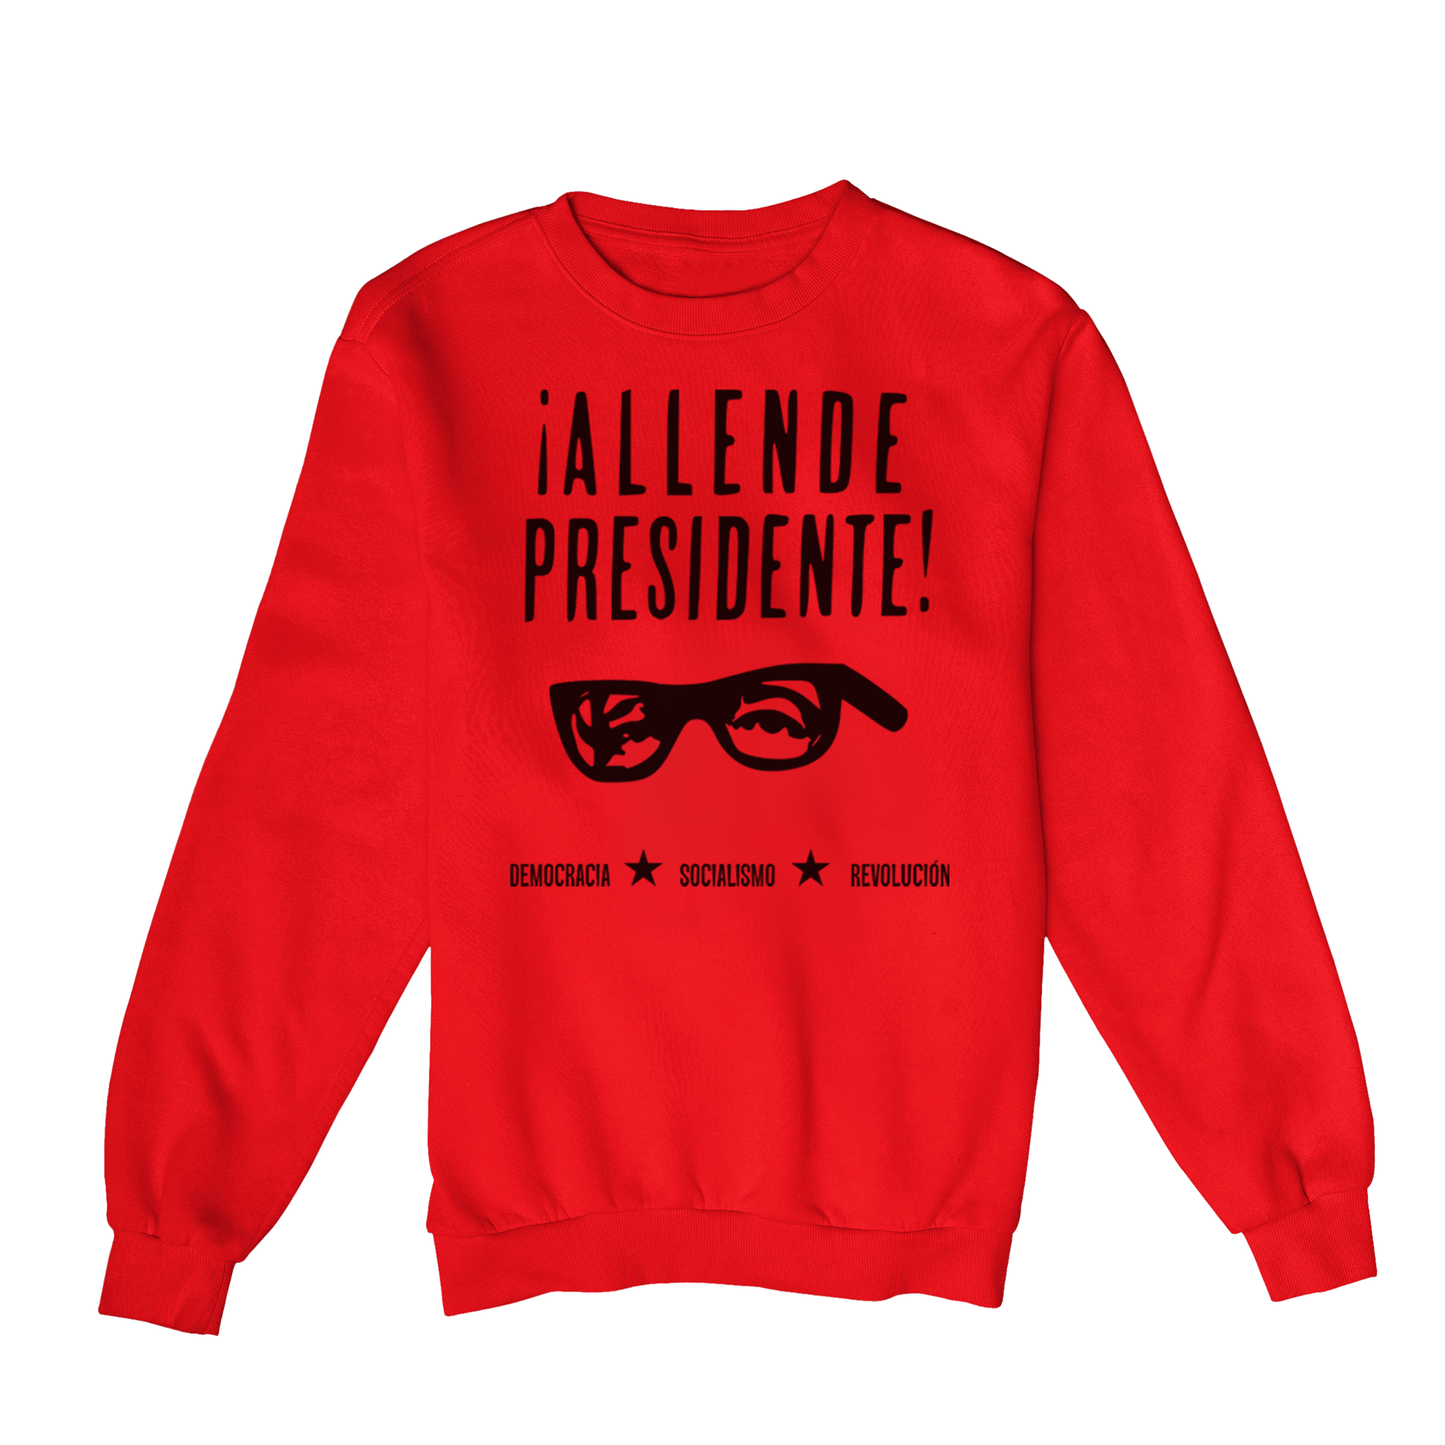 Moletom Estampa: Texto Allende Presidente com acentos hispânicos, recorte dos olhos e óculos de Salvador Allende, texto no rodapé: DEMOCRACIA, SOCIALISMO e REVOLUCIÓN intercalados por duas estrelas.